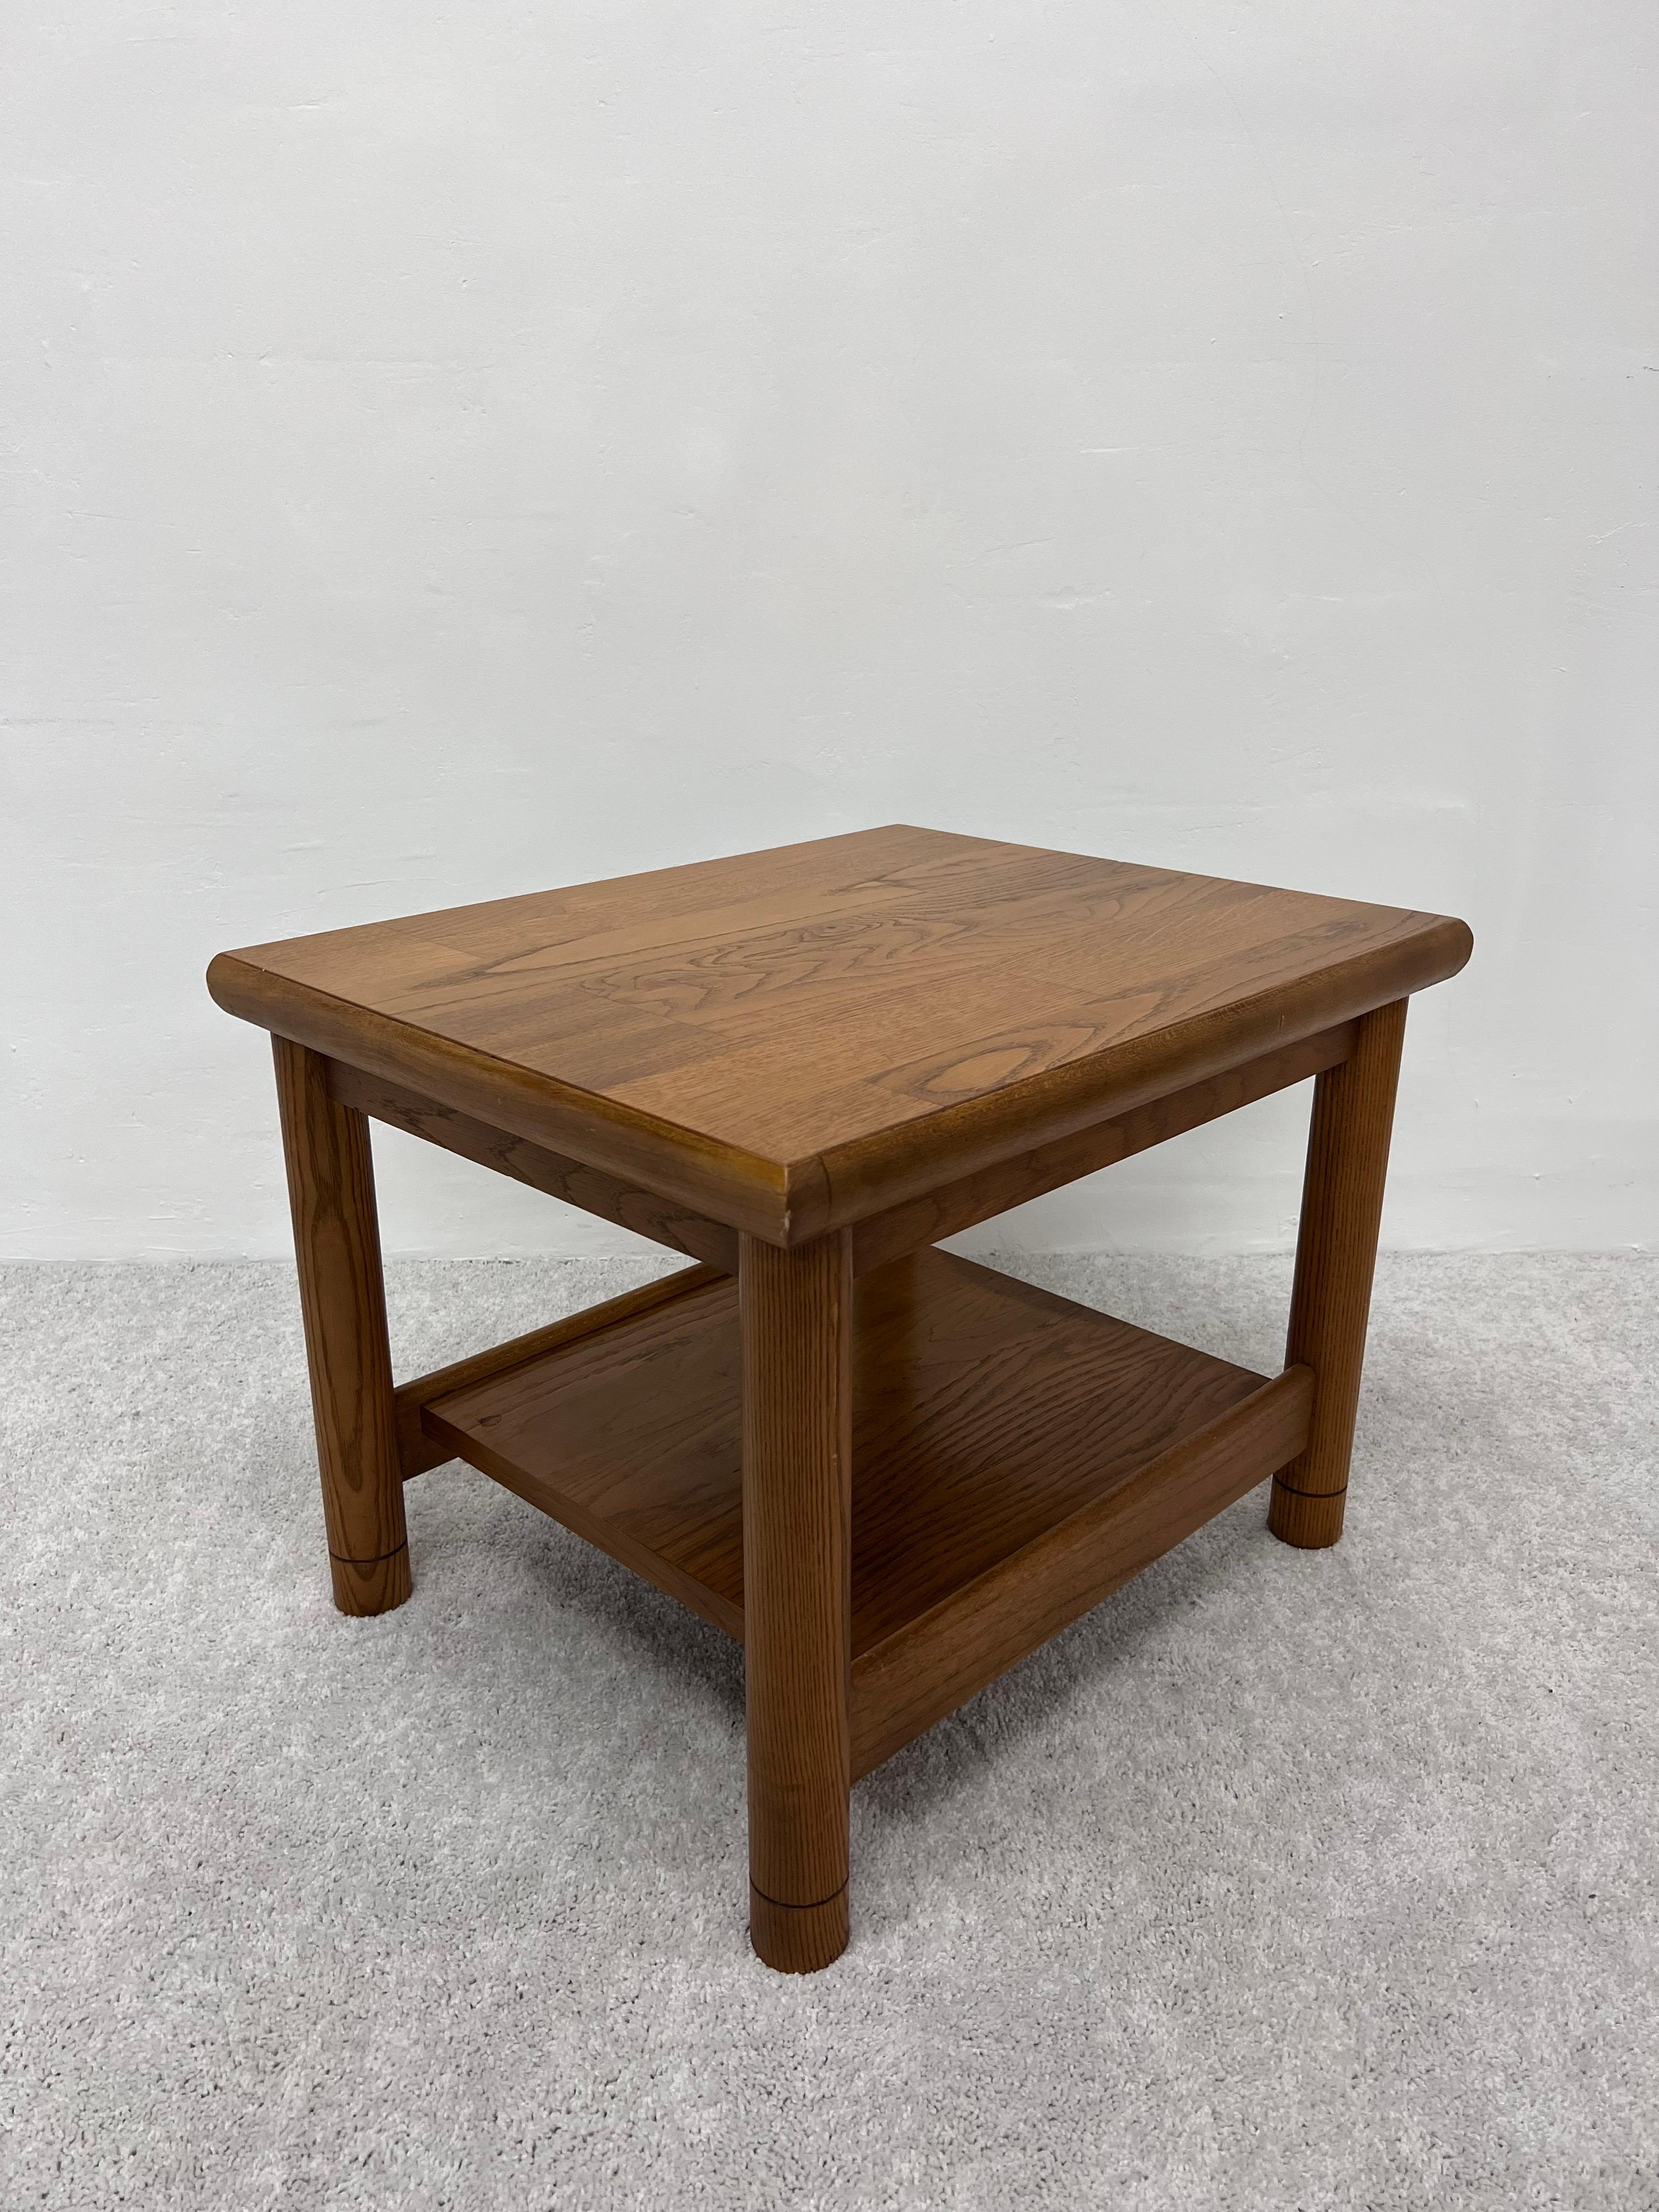 American Mid-Century Lane Altavista Oak Side Tables, 1970s - a Pair For Sale